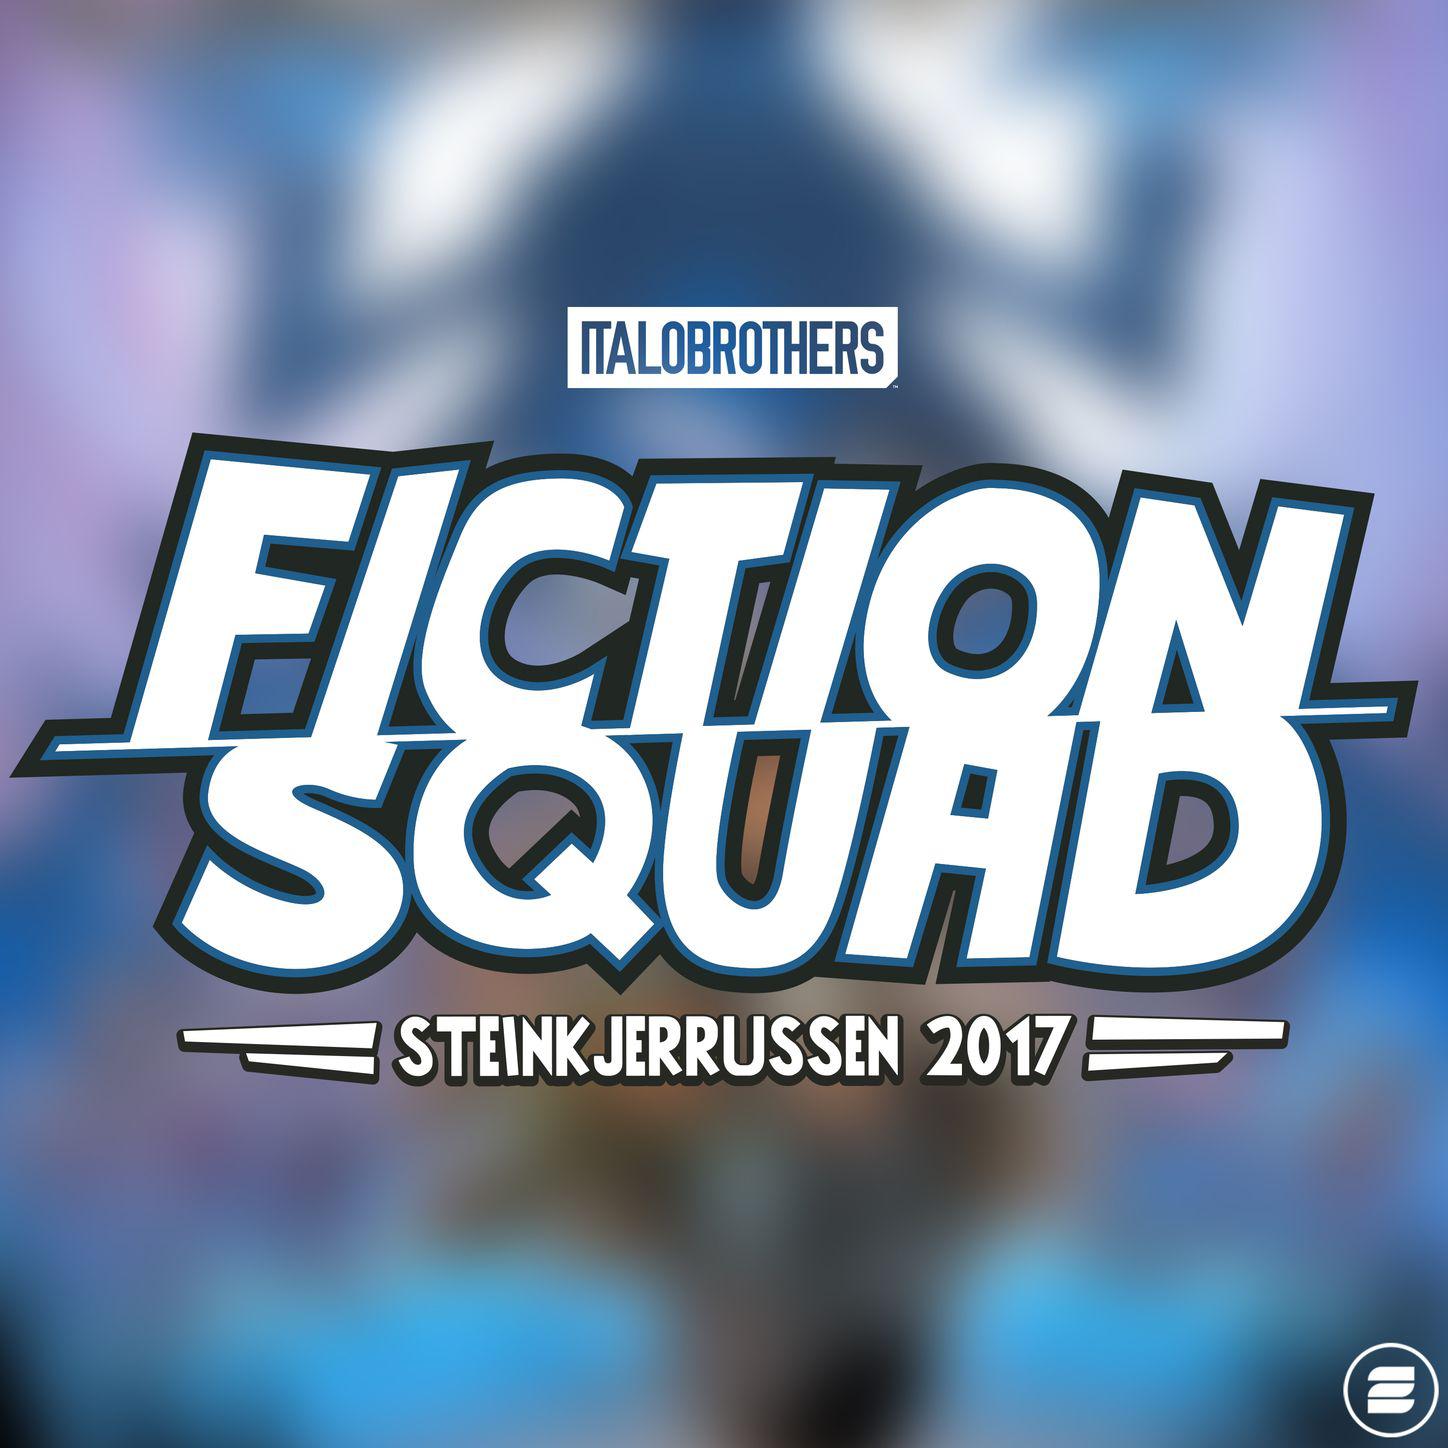 Fiction Squad